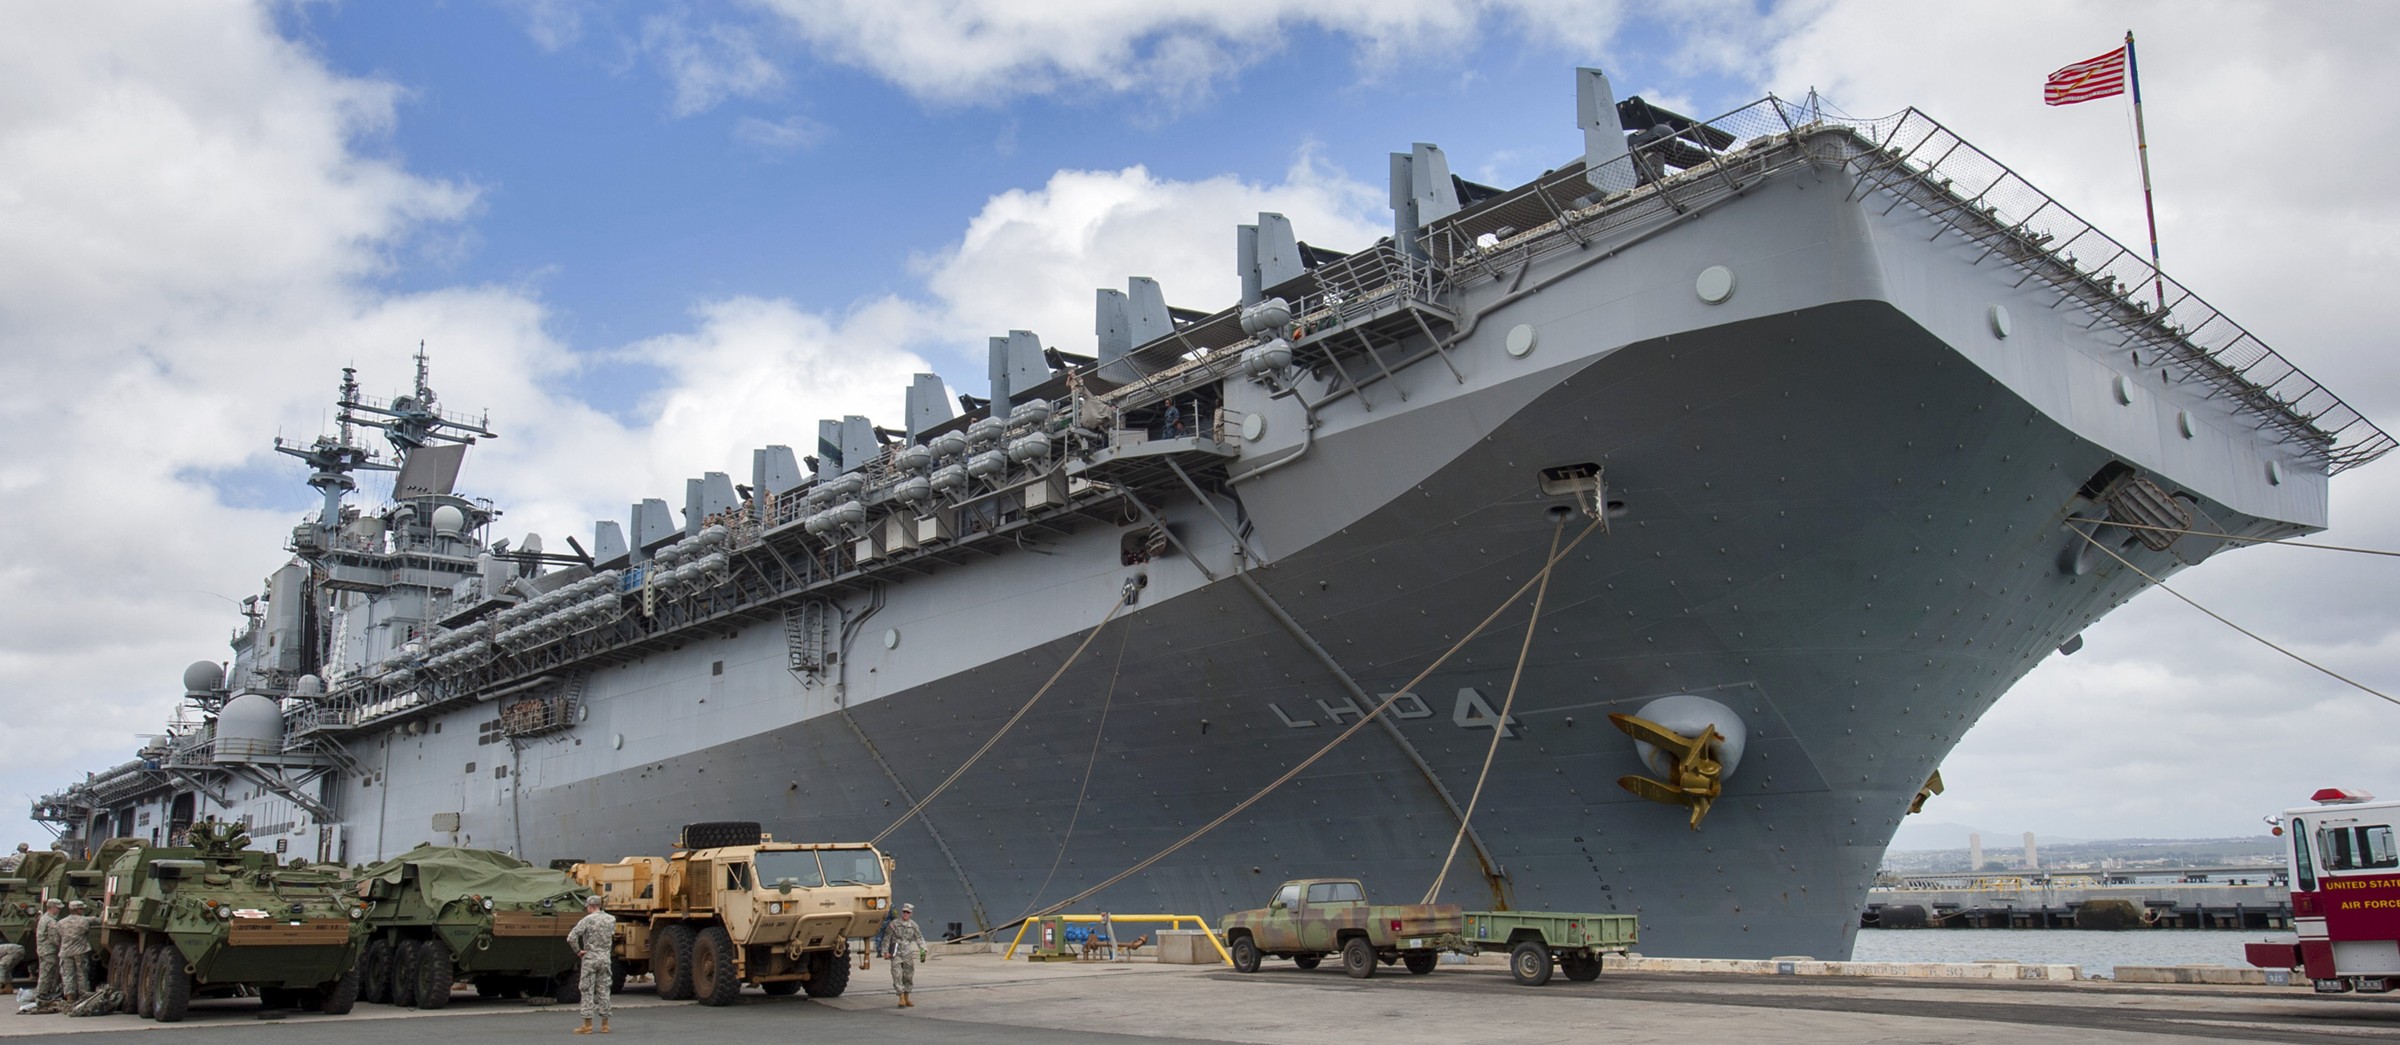 lhd-4 uss boxer wasp class amphibious assault ship dock landing us navy joint base pearl harbor hickam hawaii 91